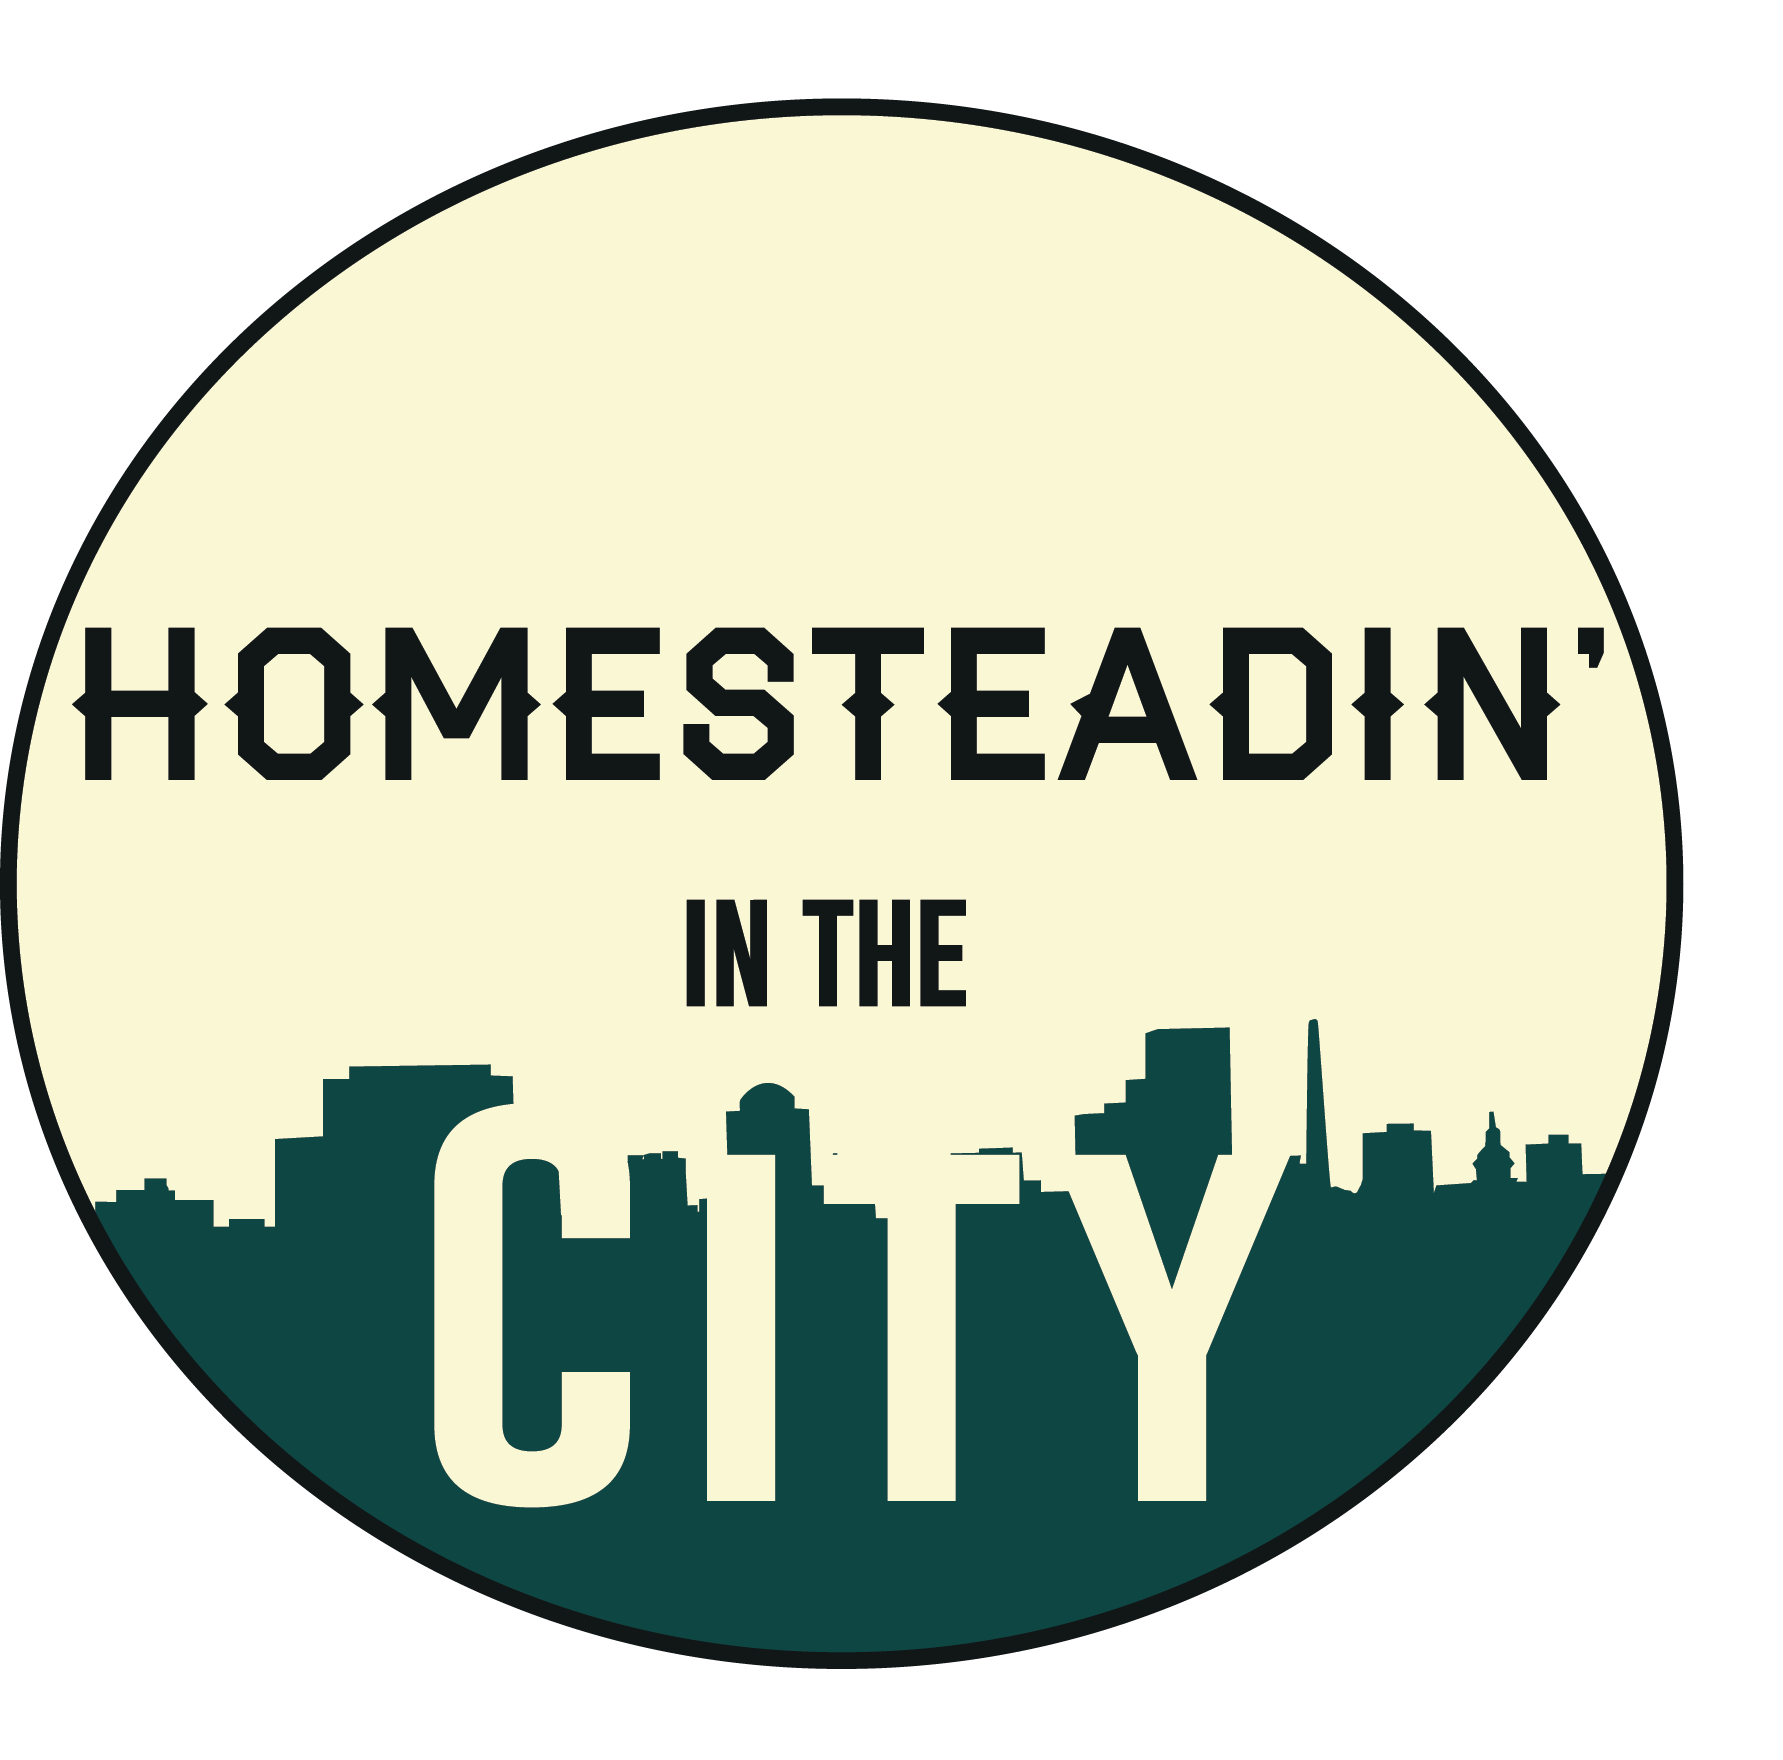 Homesteadin' In The City